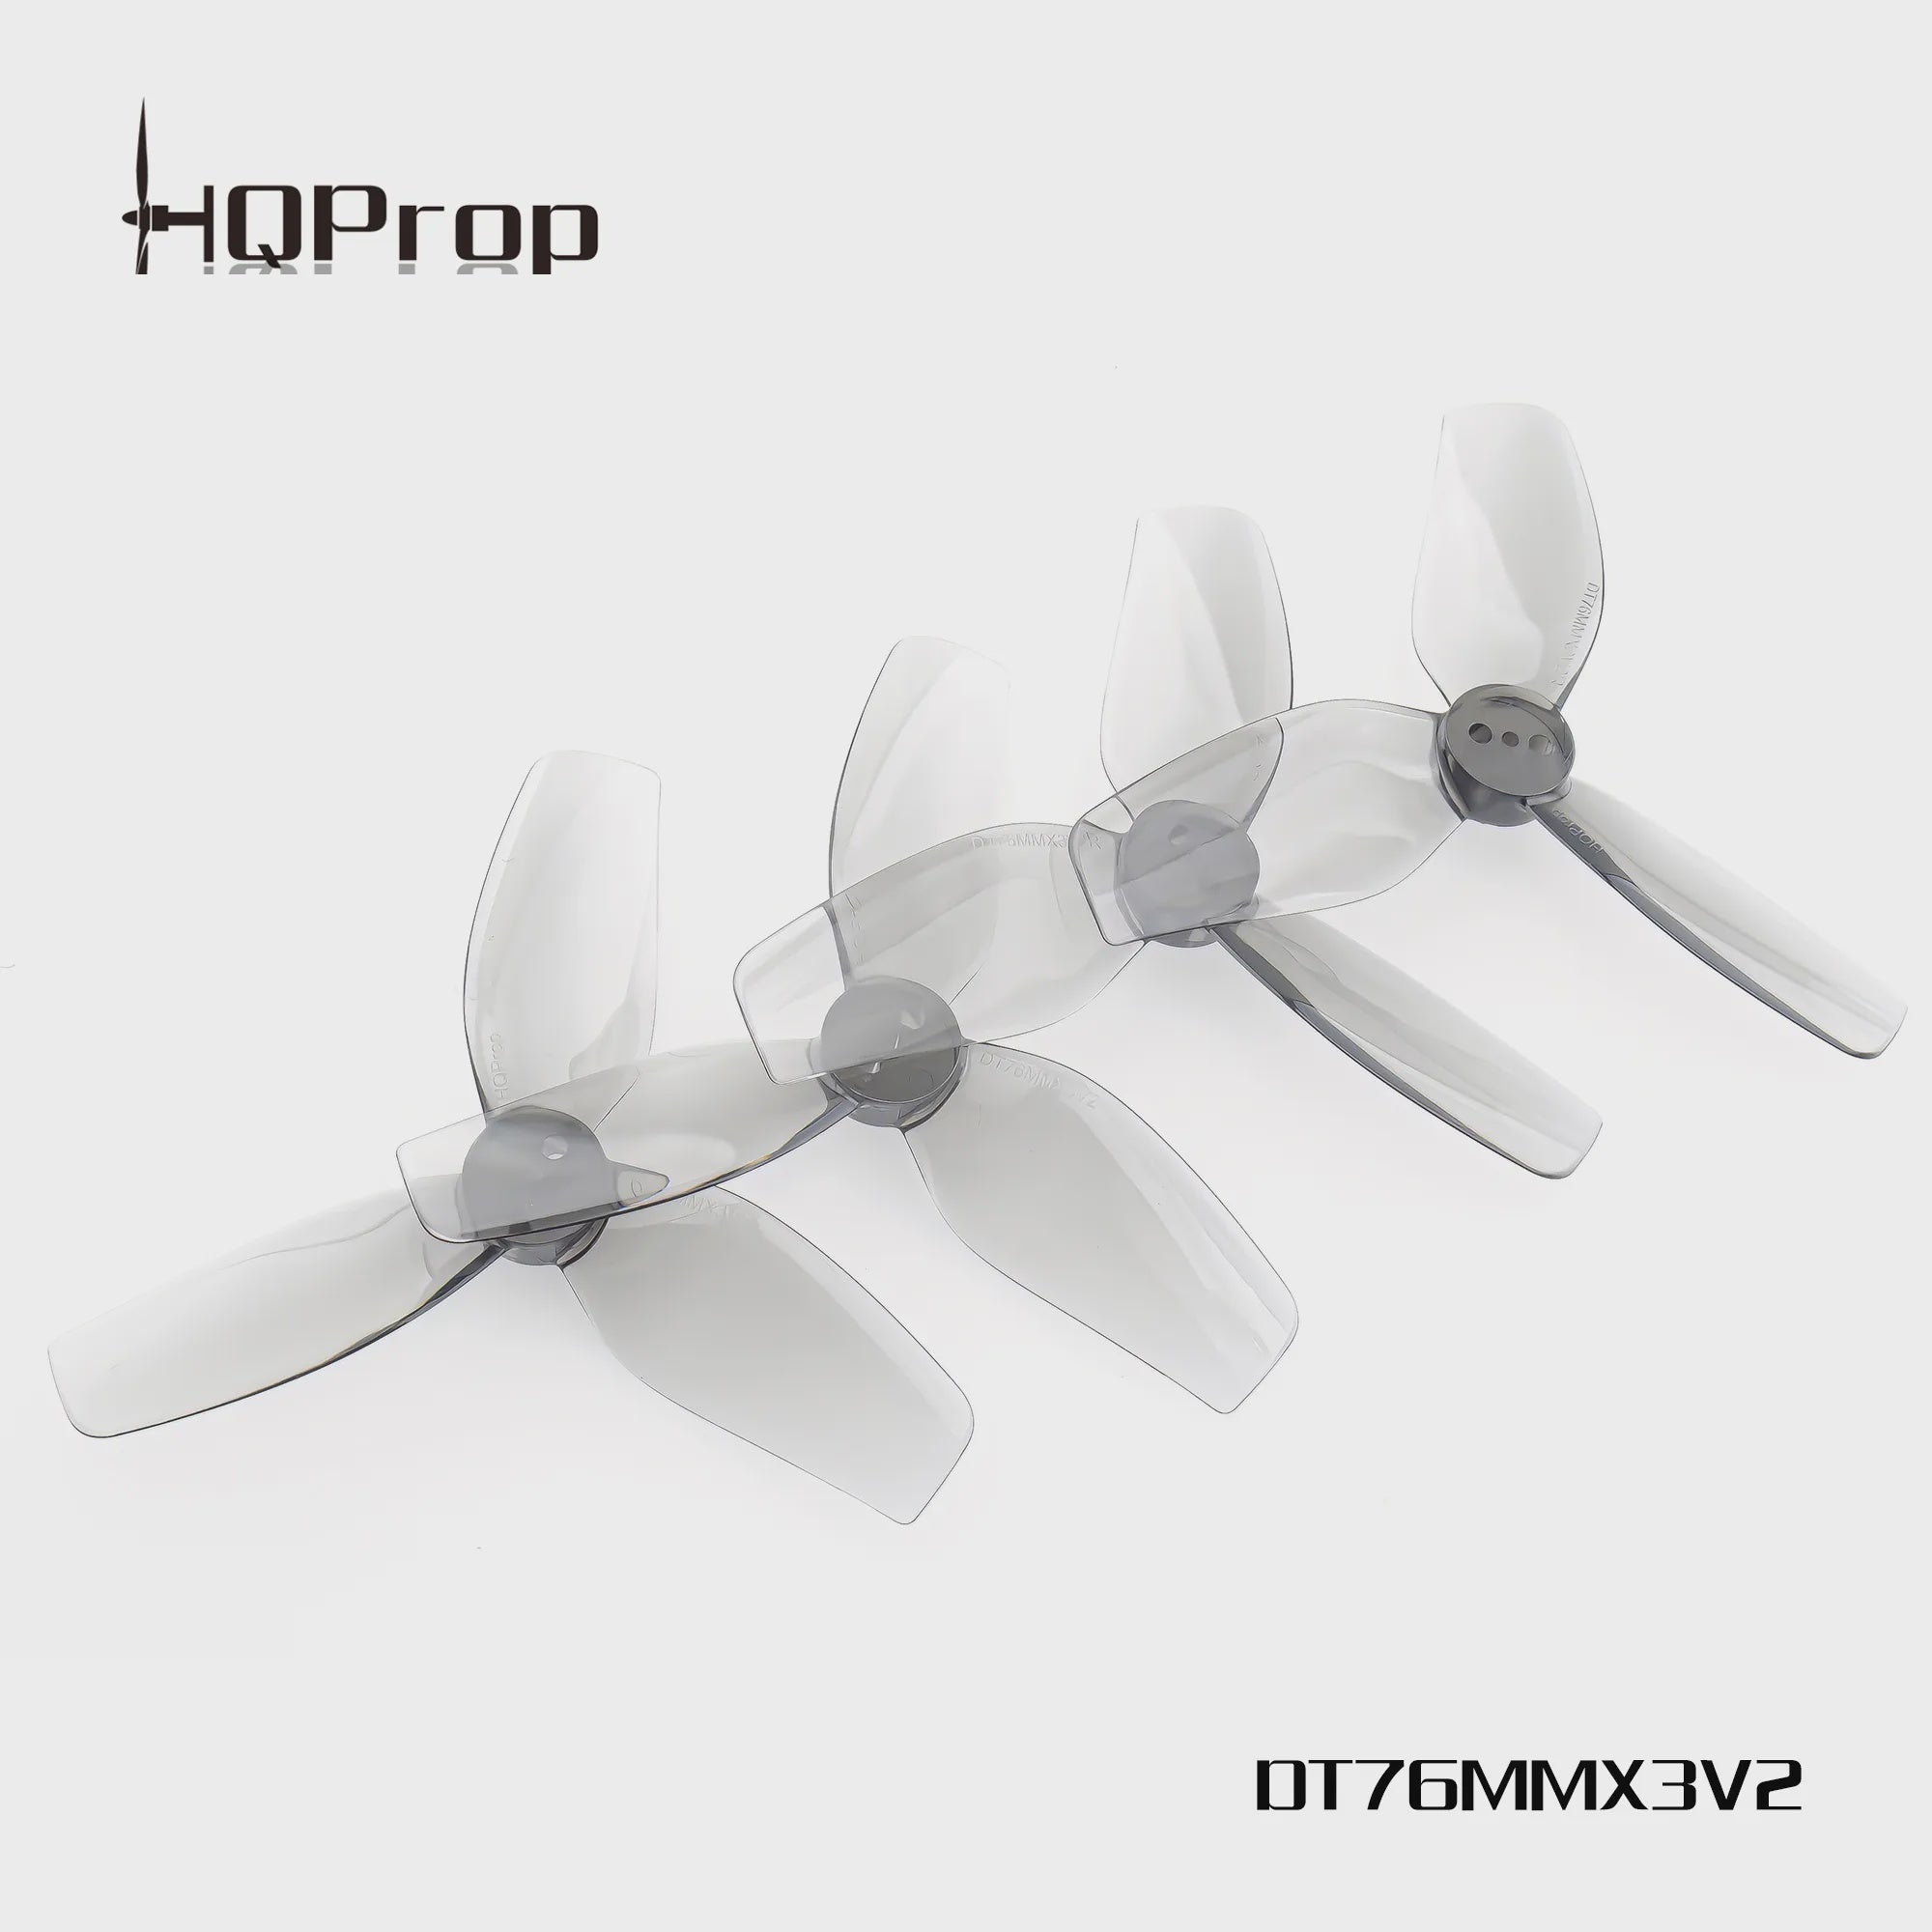 HQProp DT76MMX3 V2 3" CineWhoop Propellers (2CW+2CCW)